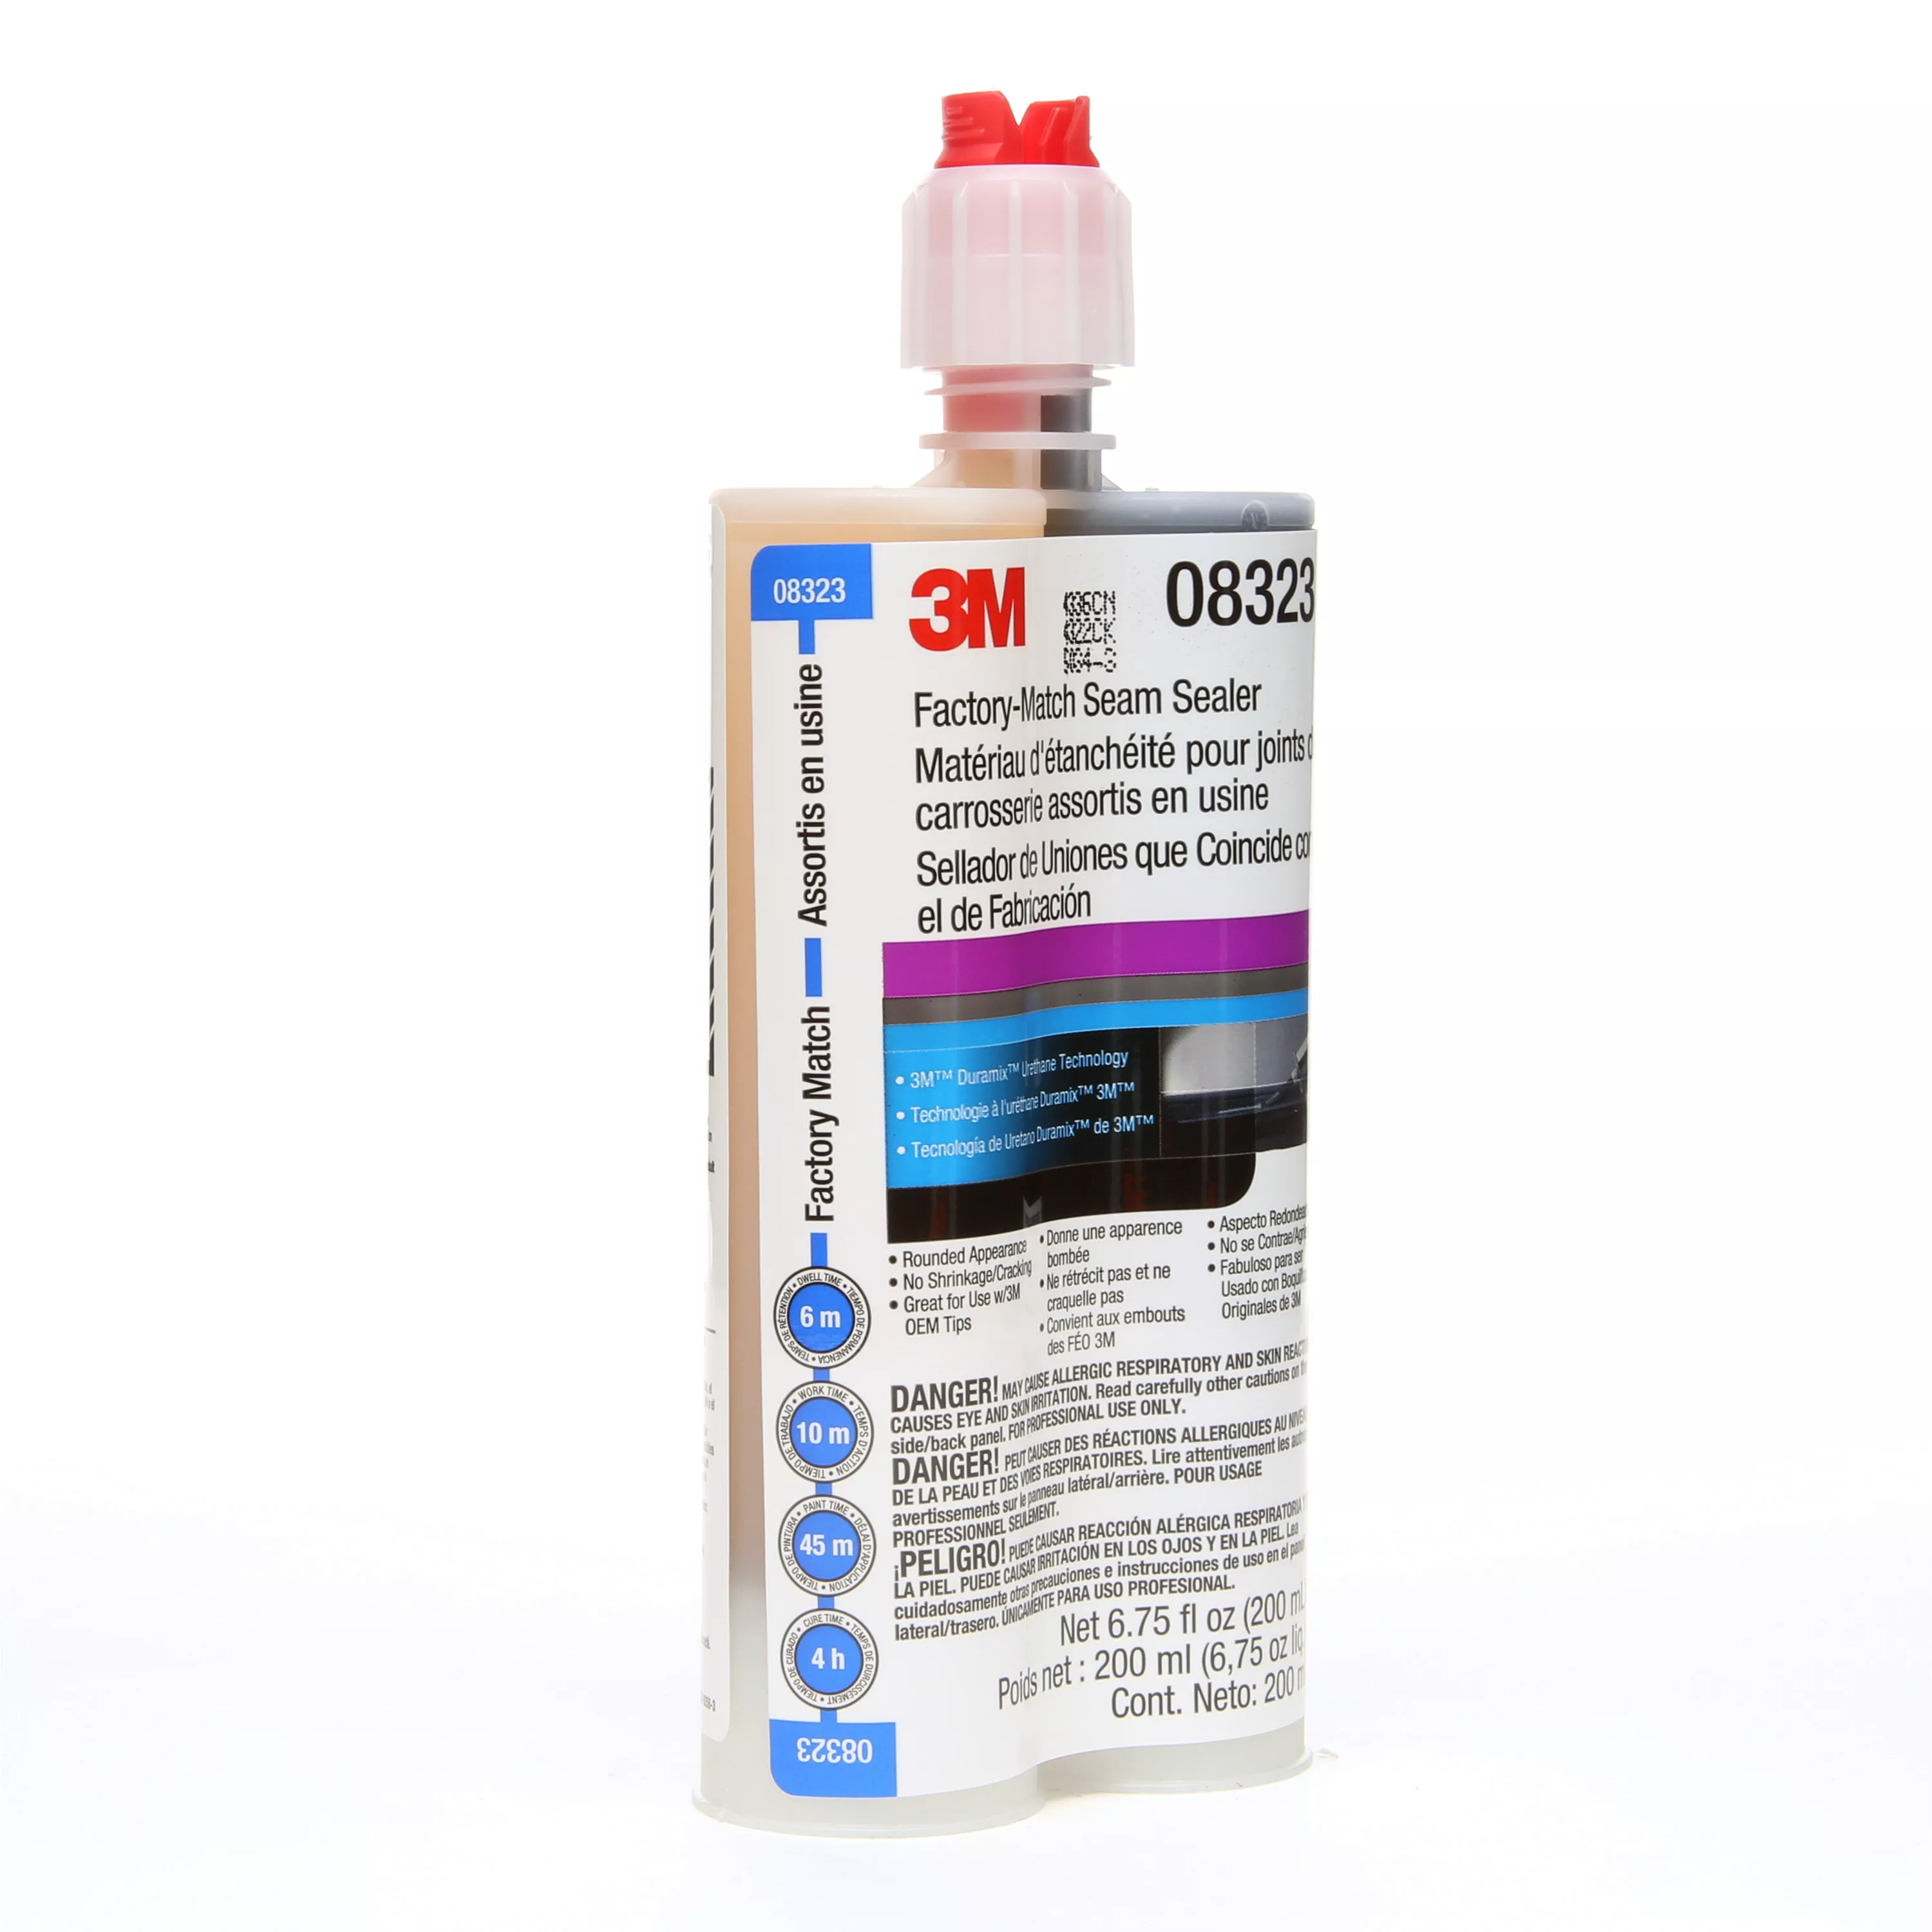 SKU 7000148202 | 3M™ Factory-Match Seam Sealer